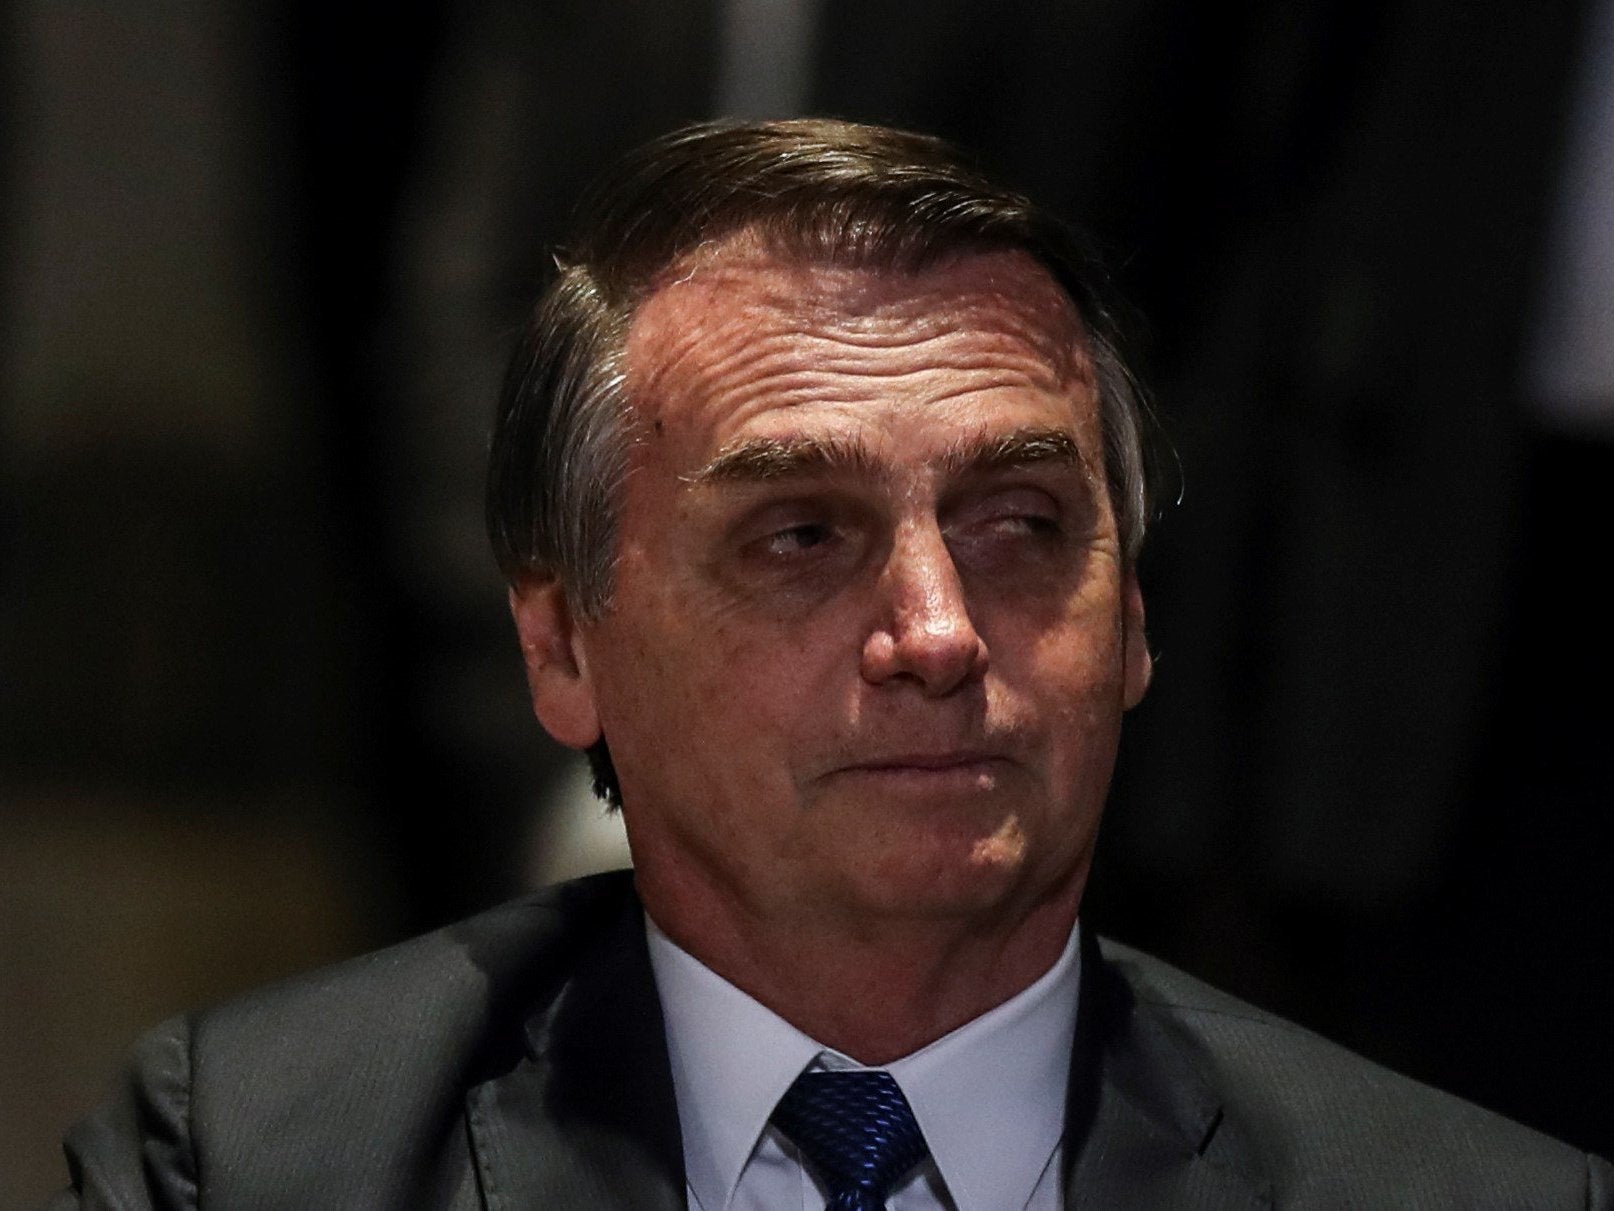 Brazil's president Bolsonaro says Holocaust can be 'forgiven but not forgotten'